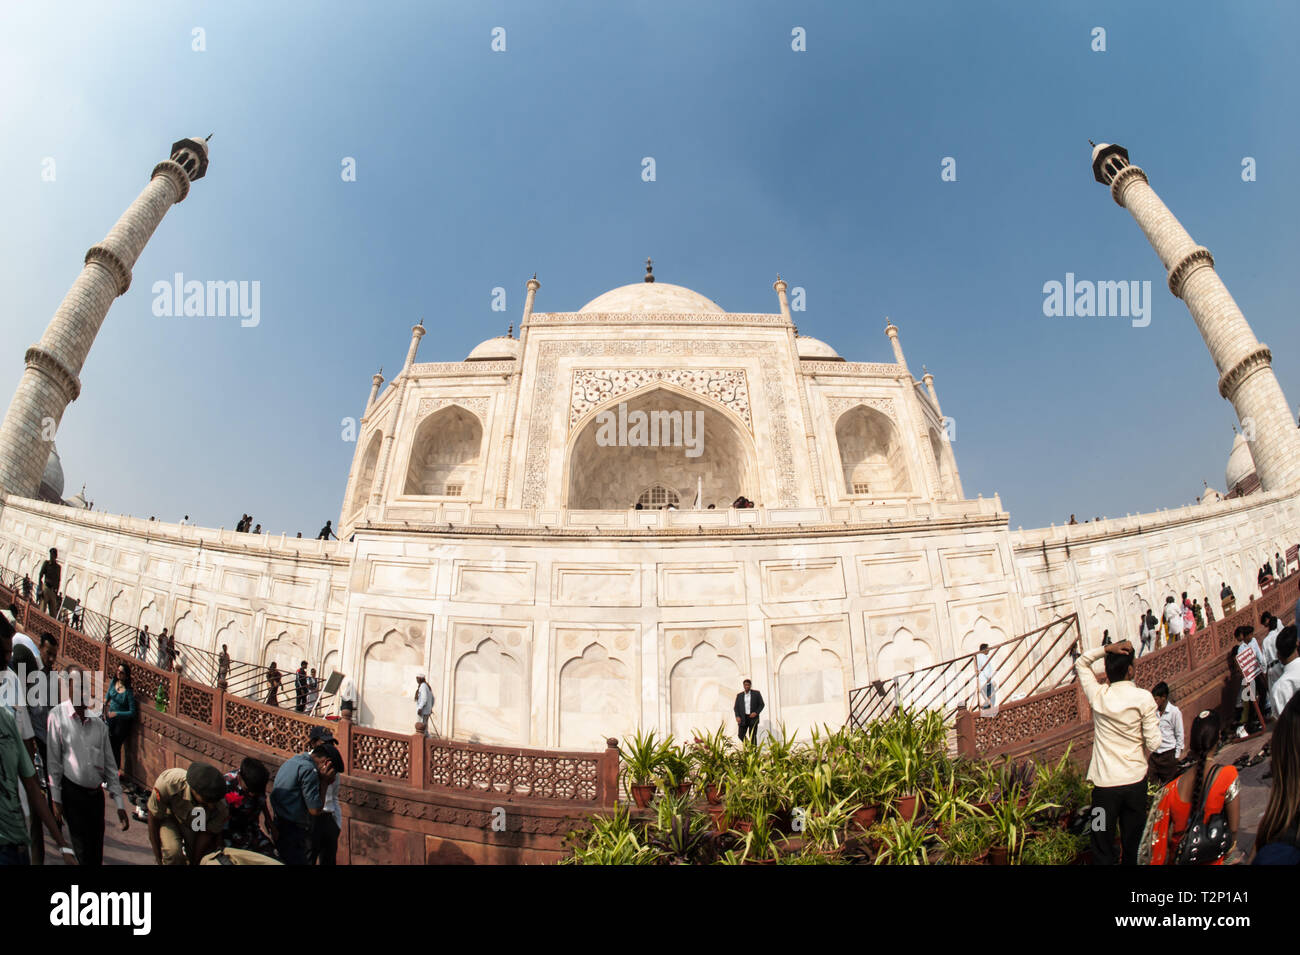 The Taj Mahal, Agra, India, through a wide angle fish eye lens. Stock Photo